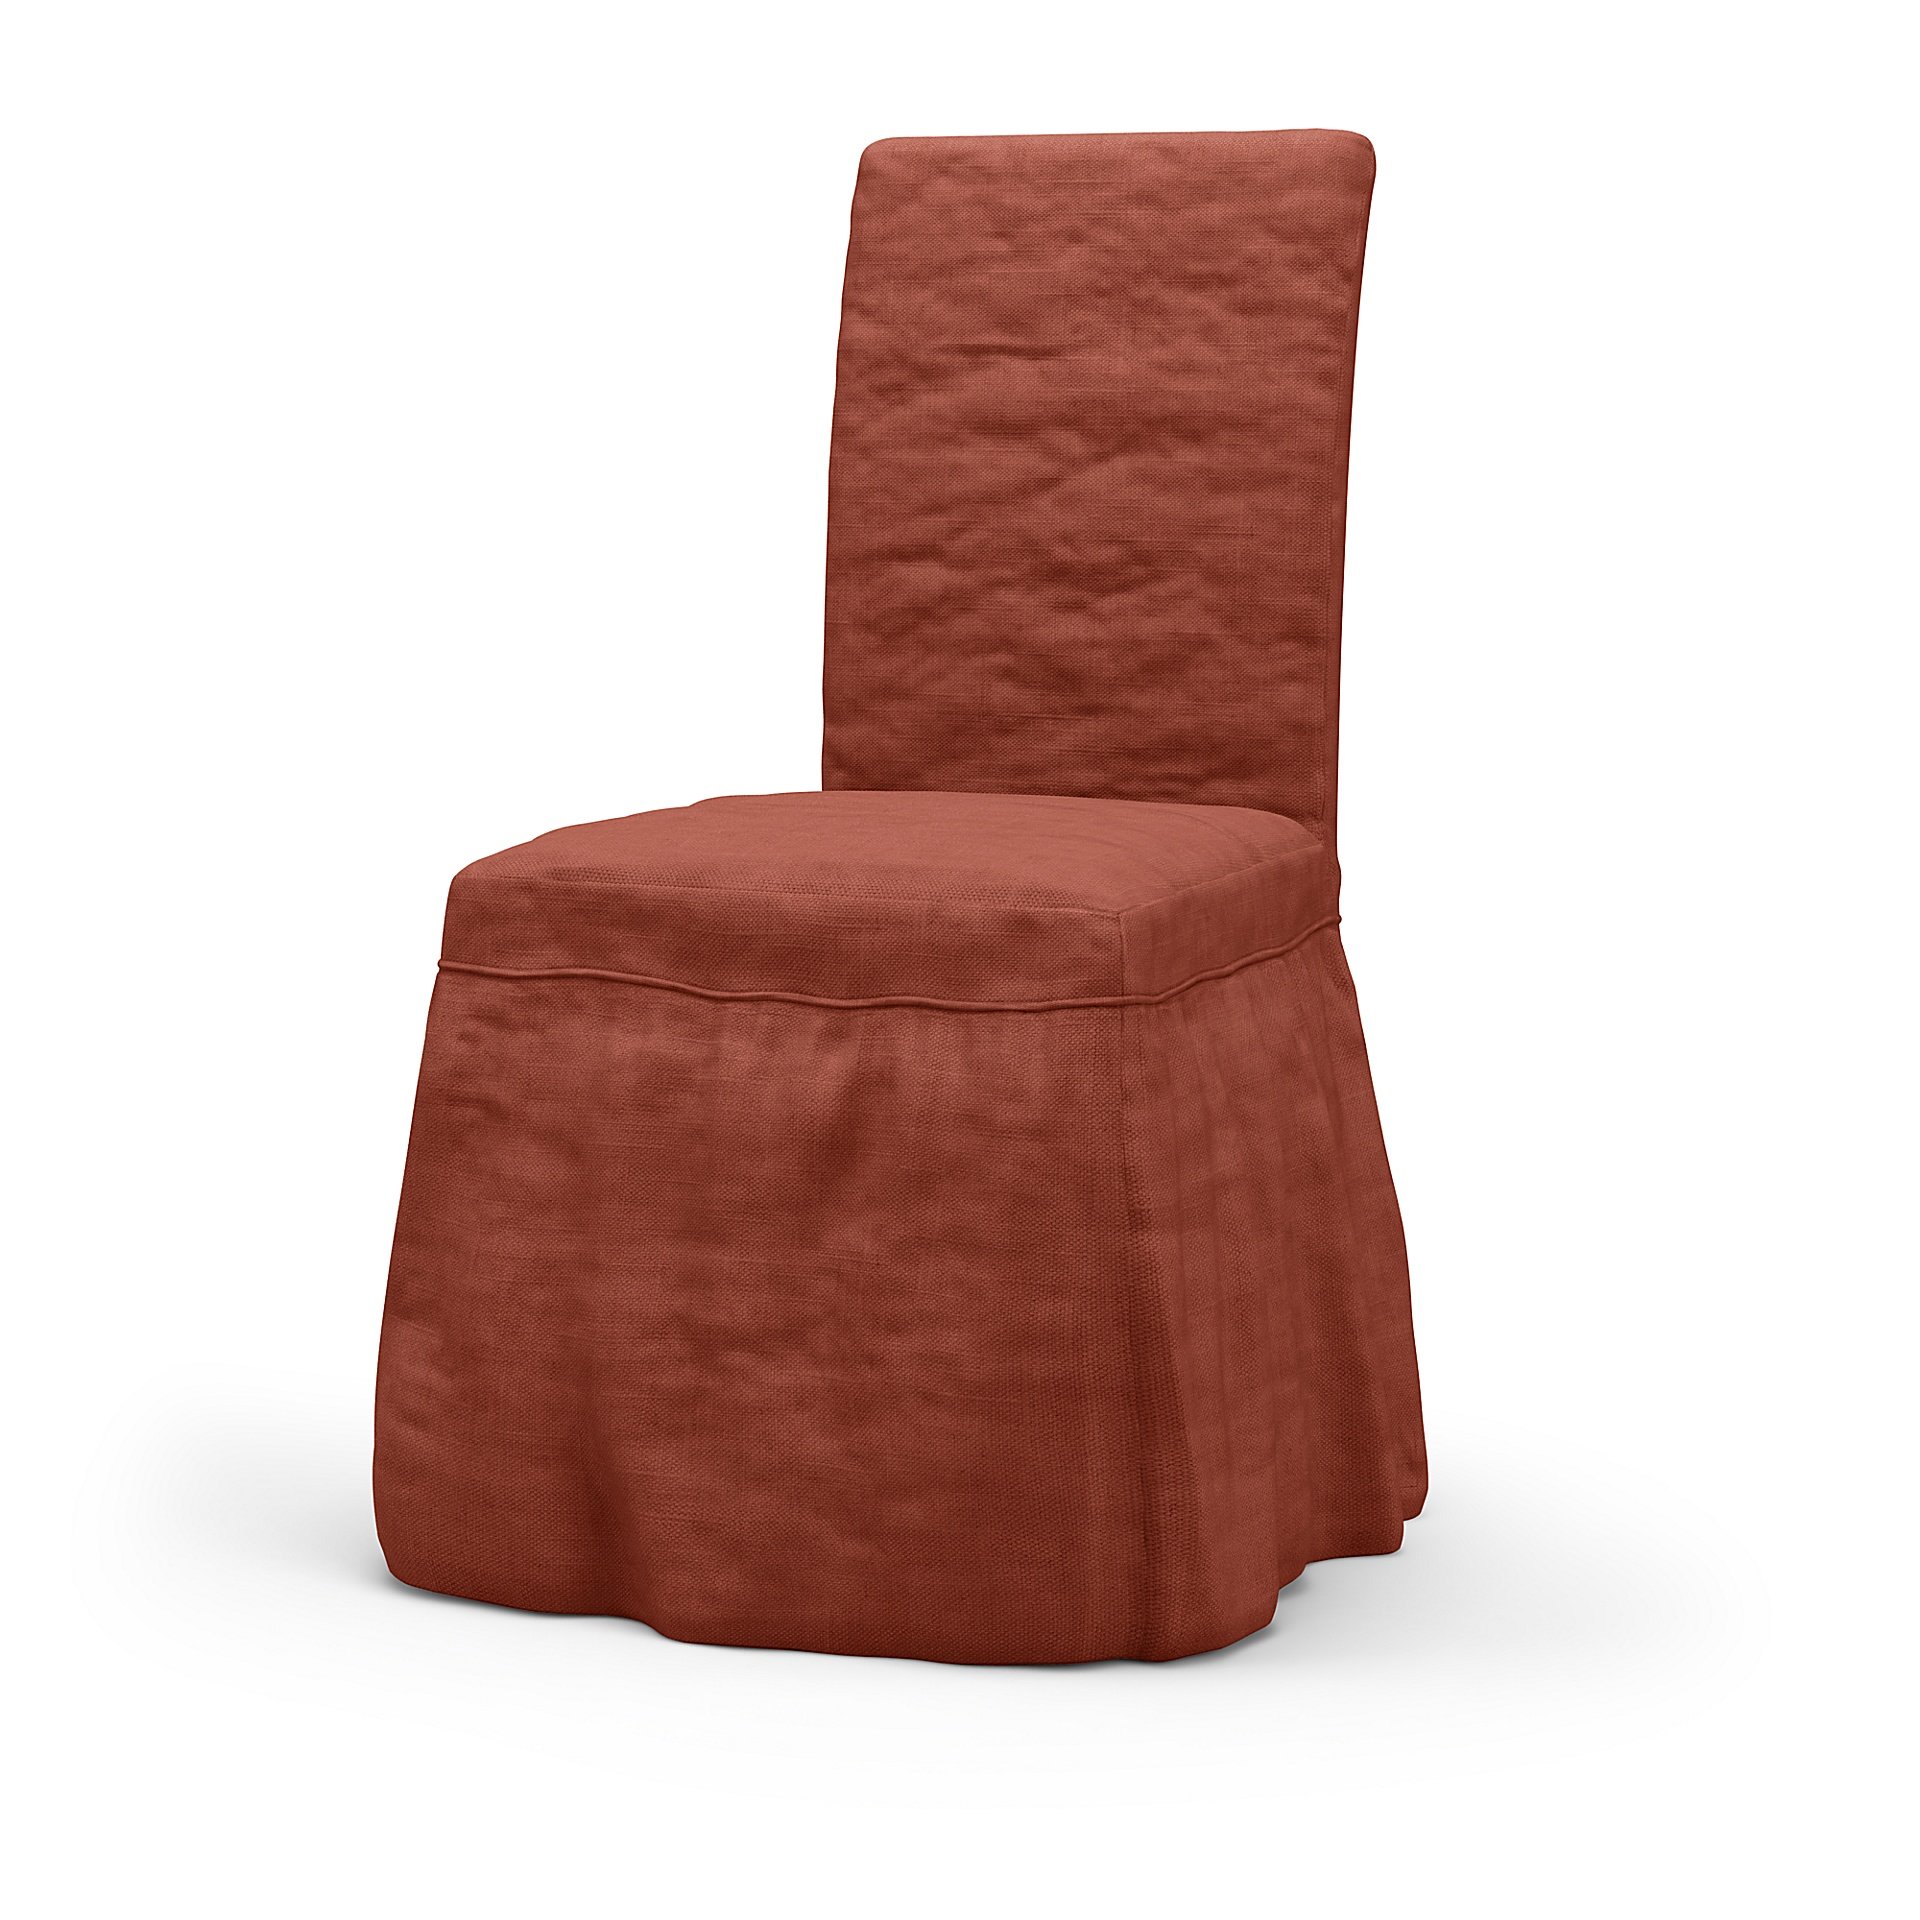 IKEA - Henriksdal Dining Chair Cover Long skirt with Ruffles (Standard model), Terracotta, Linen - B